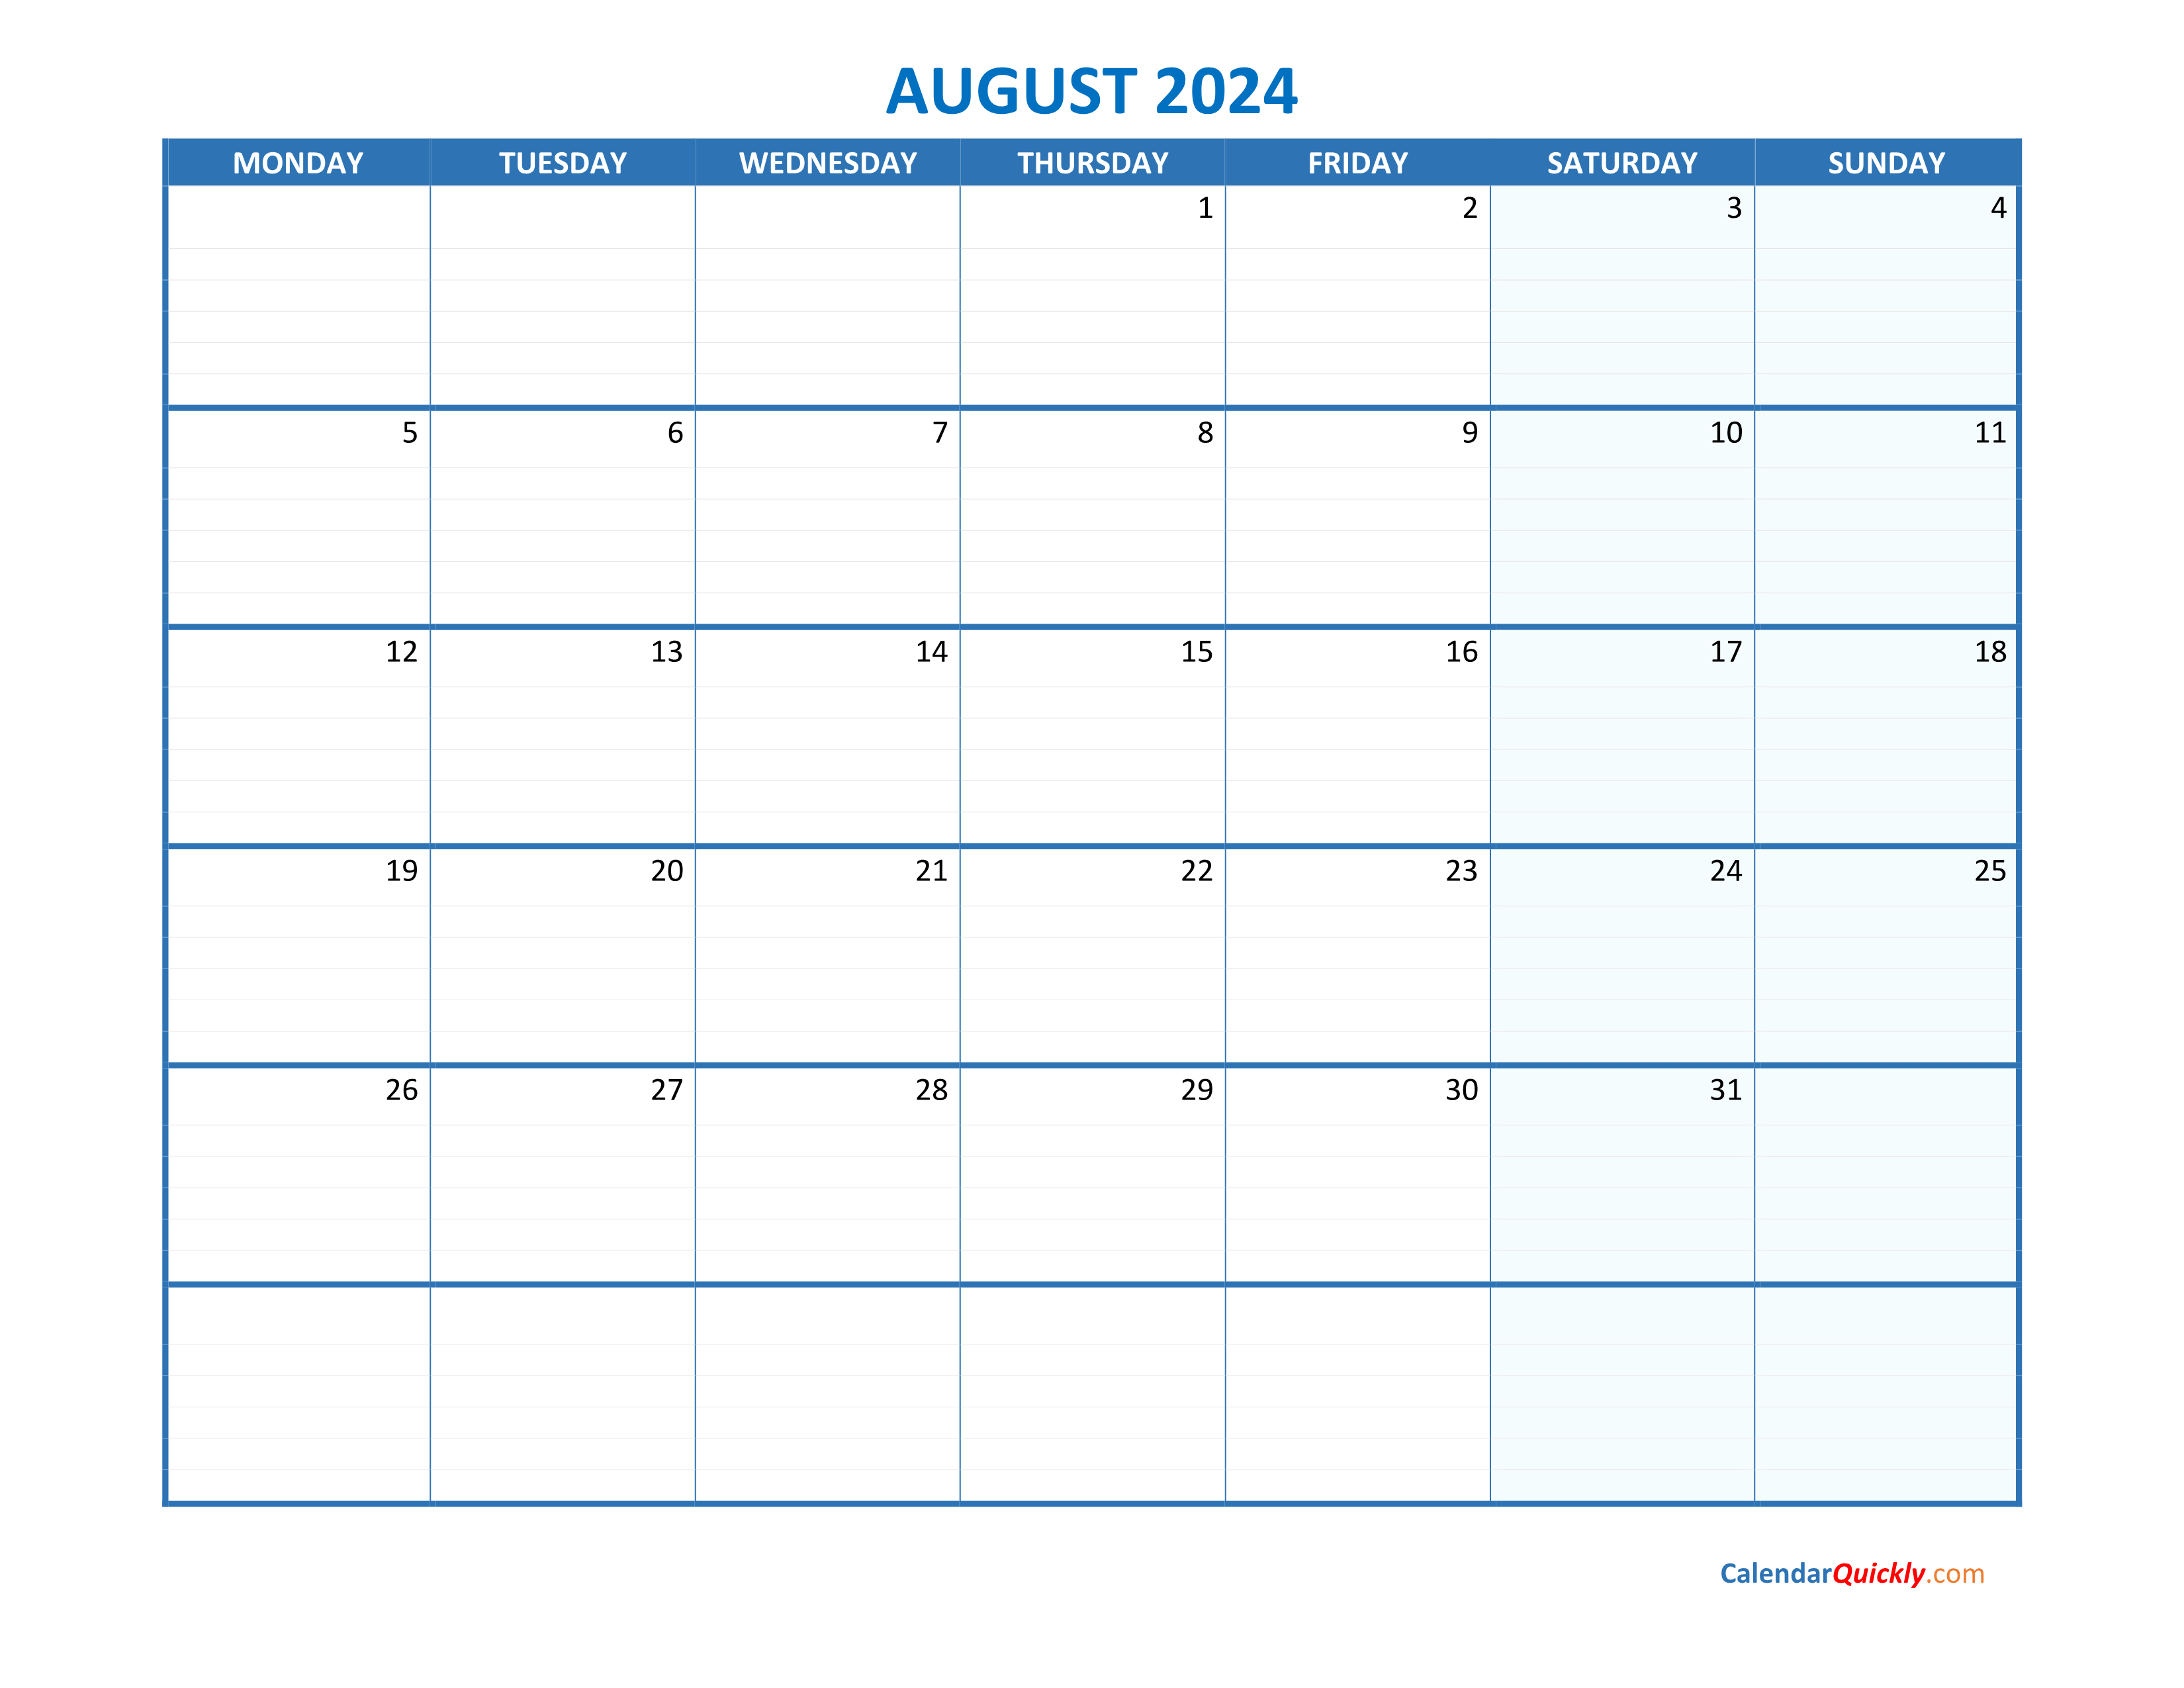 August Monday 2024 Blank Calendar Calendar Quickly